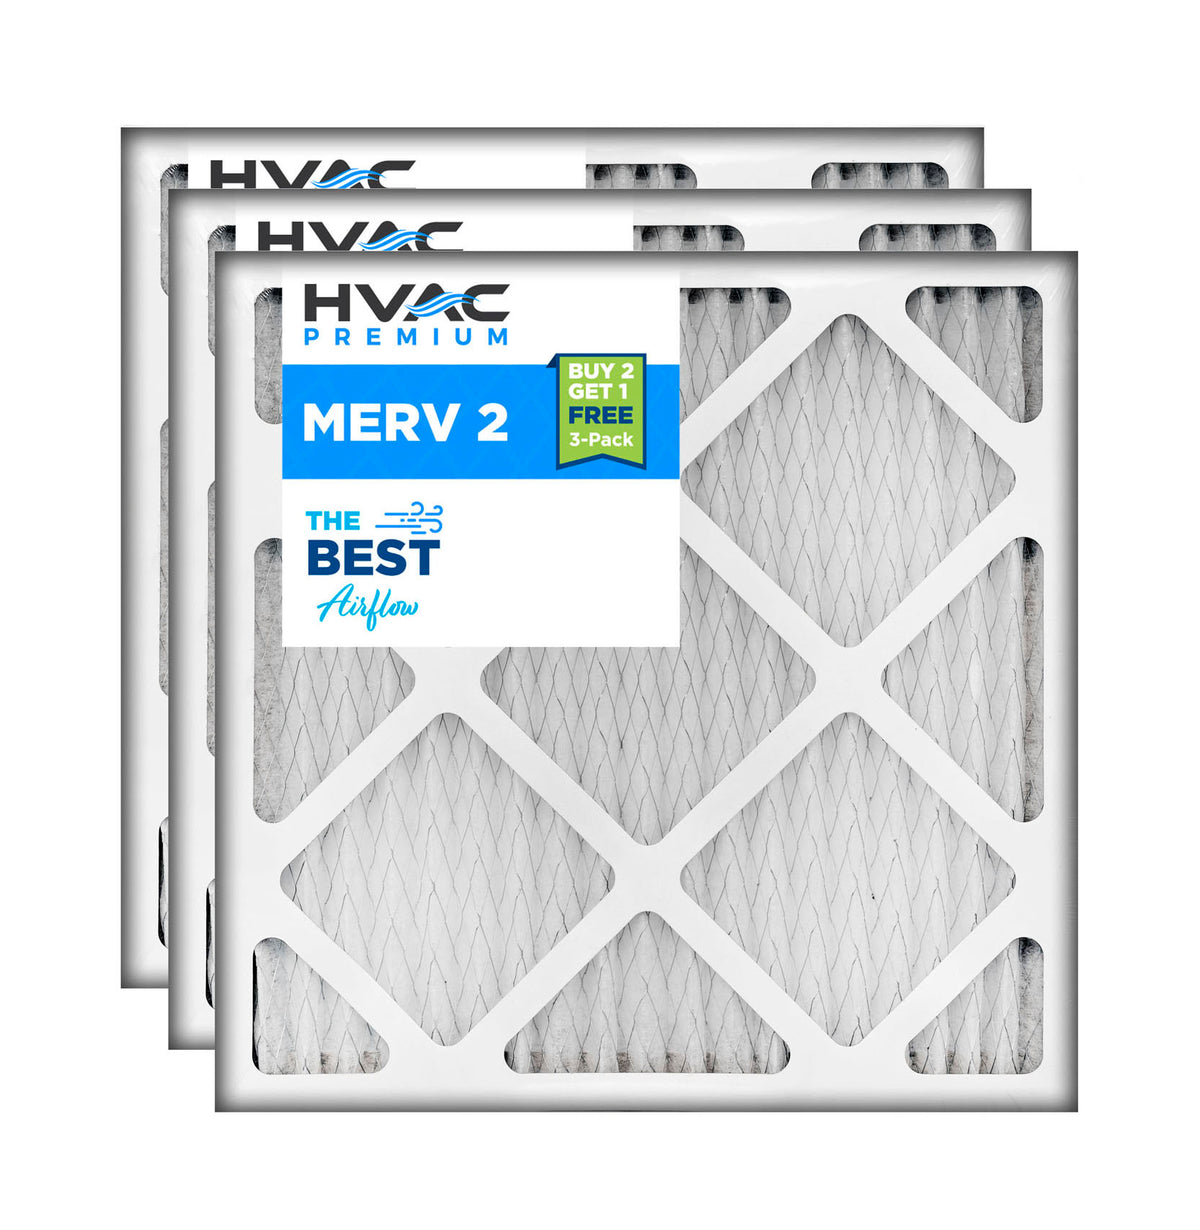 12 x 6 Merv 2 HVAC Pleated Filter, 3-Pack